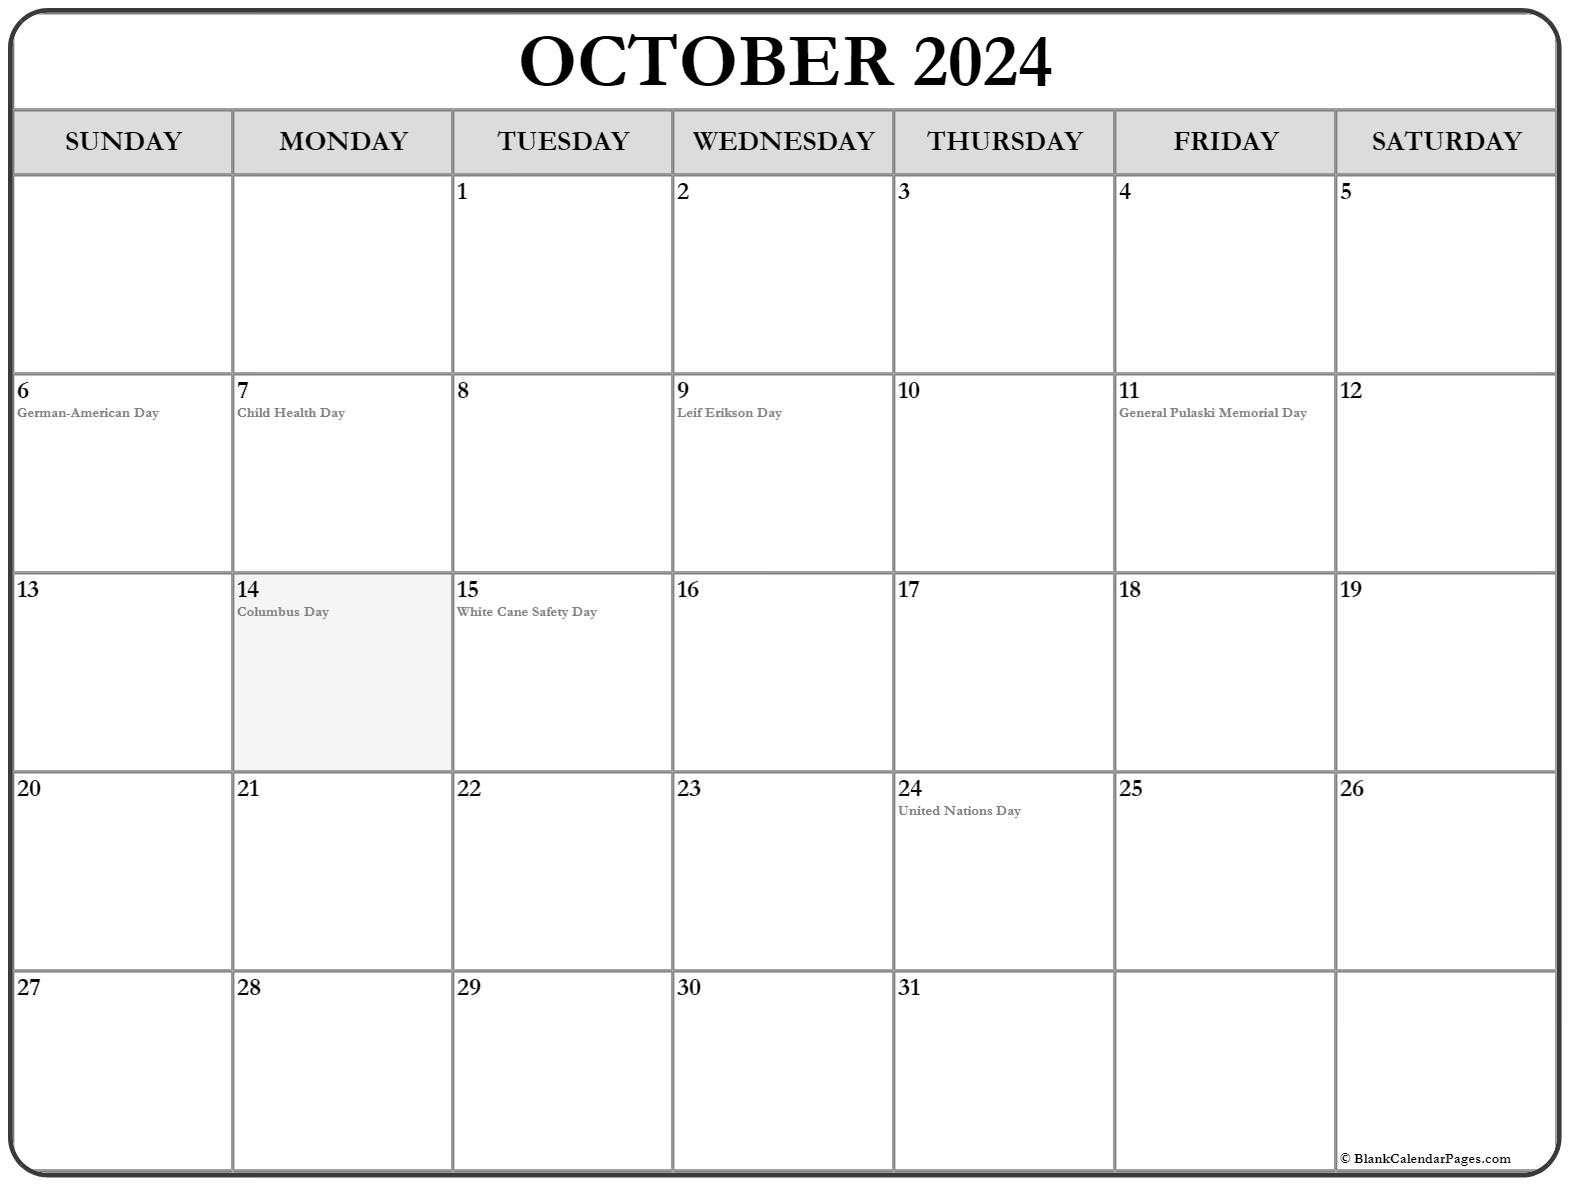 October 2022 calendar with holidays